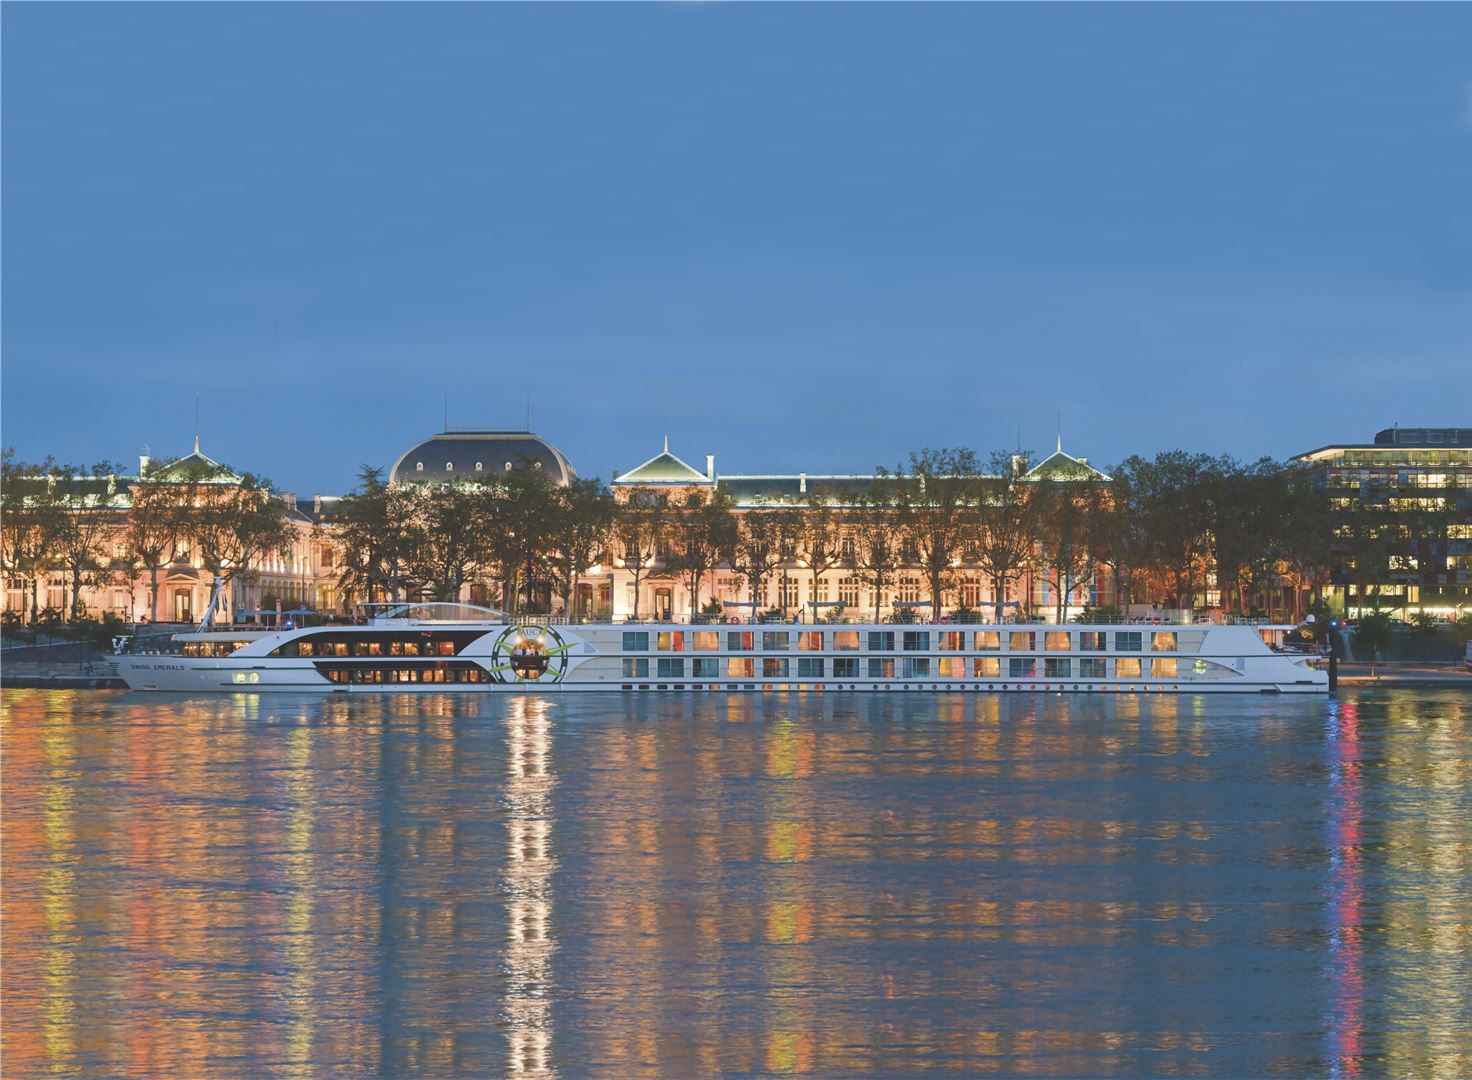 Tauck Announces 2018 River Cruise Plans